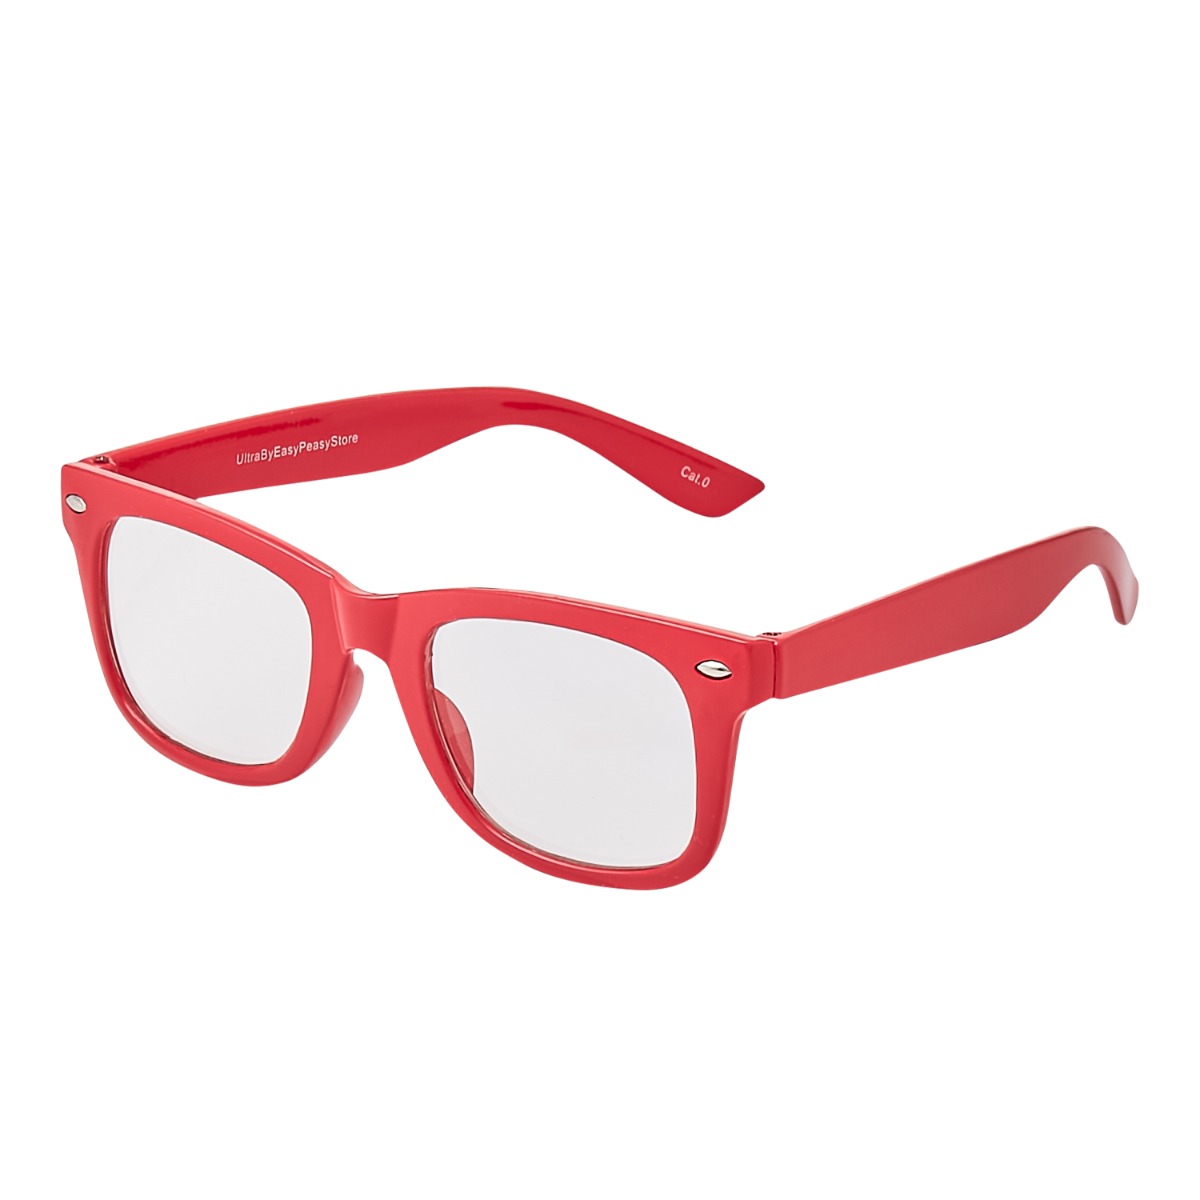 Geek Nerd Clear Lenses Glasses Optical Frames Fancy Dress Fashion Spectacles UK 